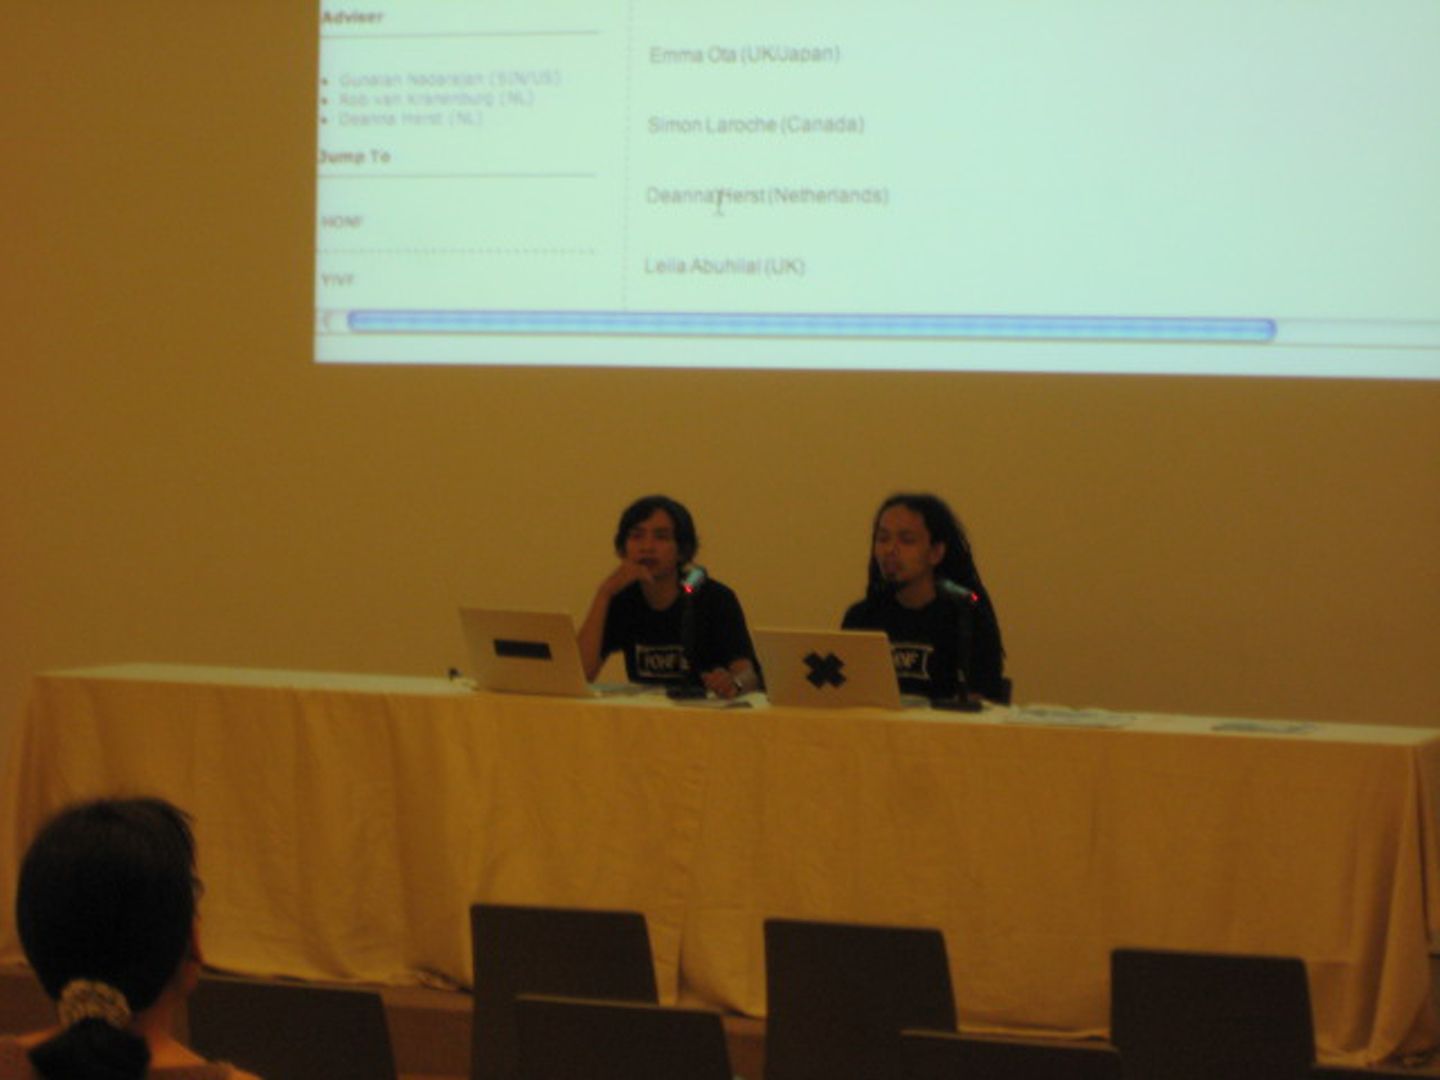 ©ISEA2008: 14th International Symposium on Electronic Art, Venzha Christiawan, House of Natural Fiber